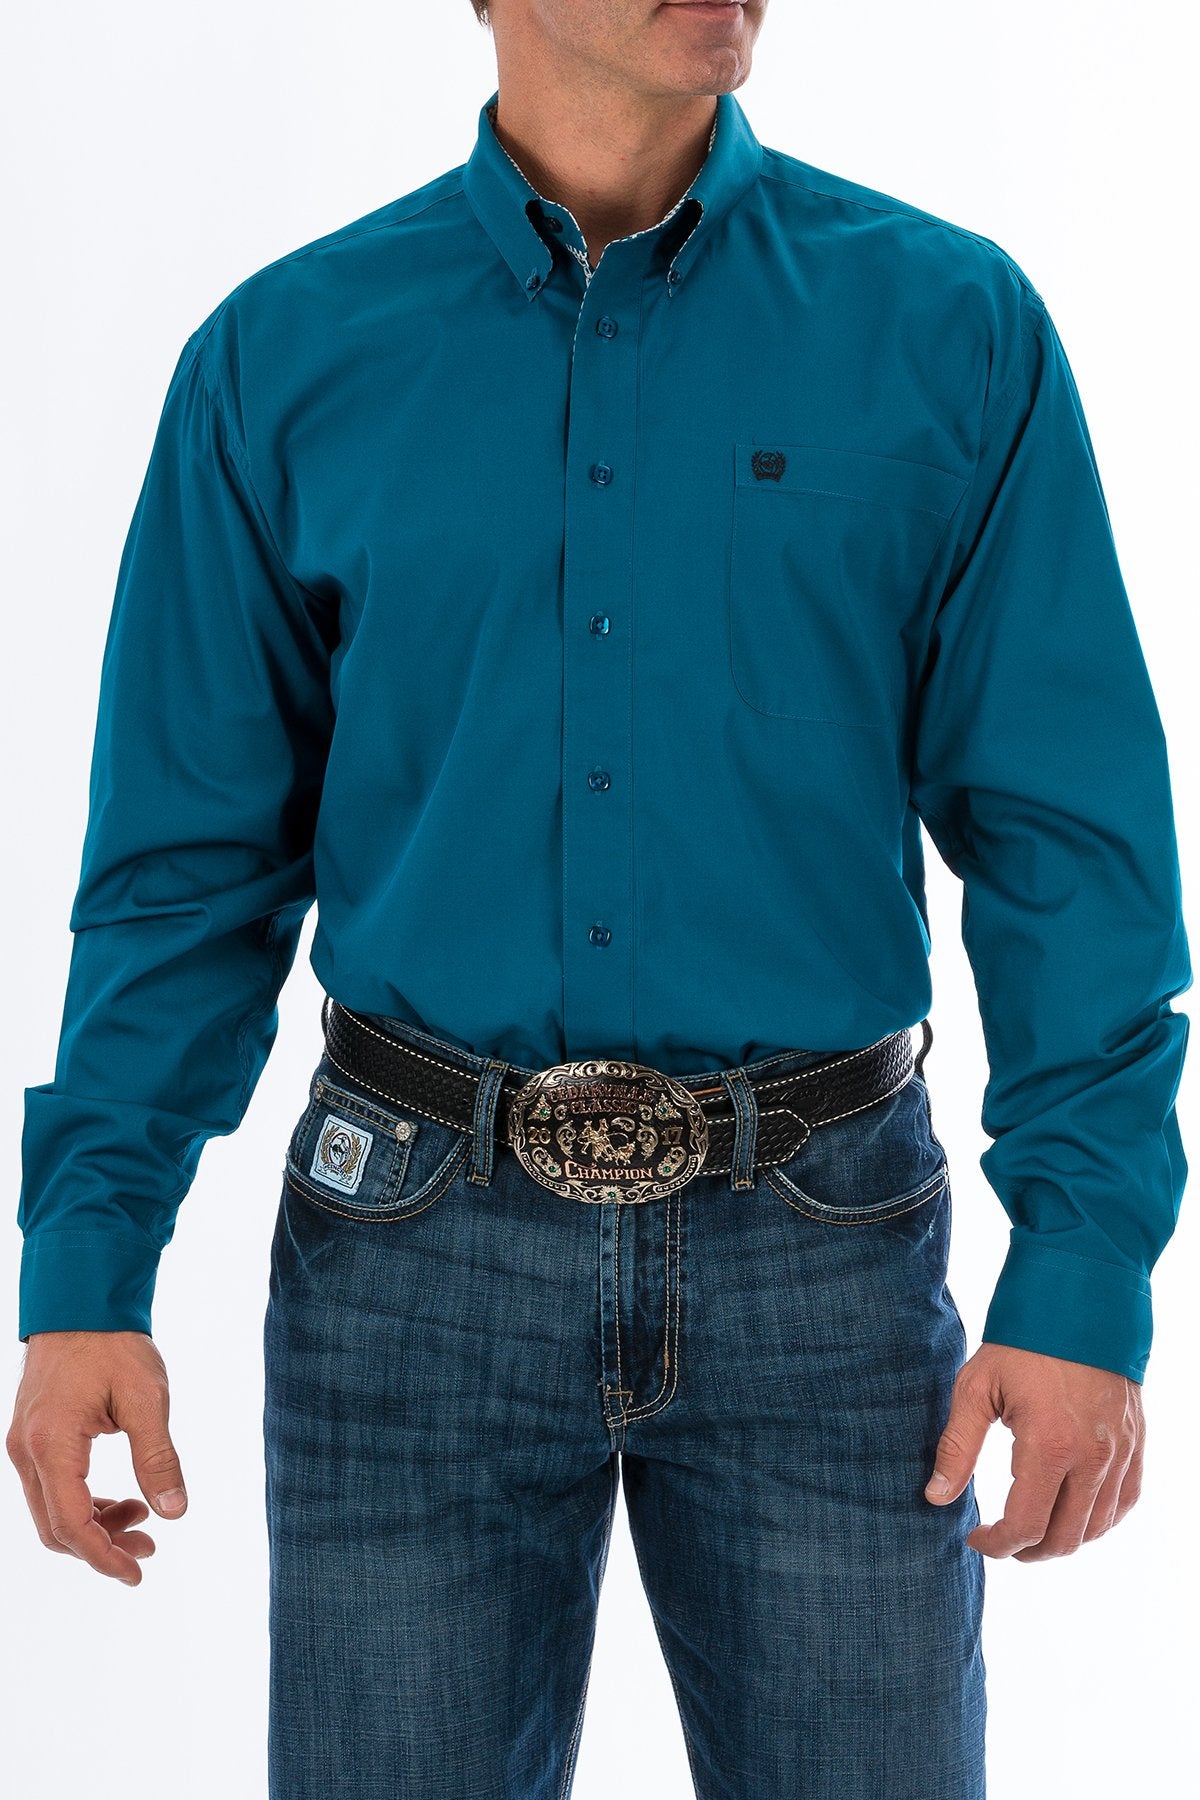 Men's Blue Cinch Shirt - Diamond K Country